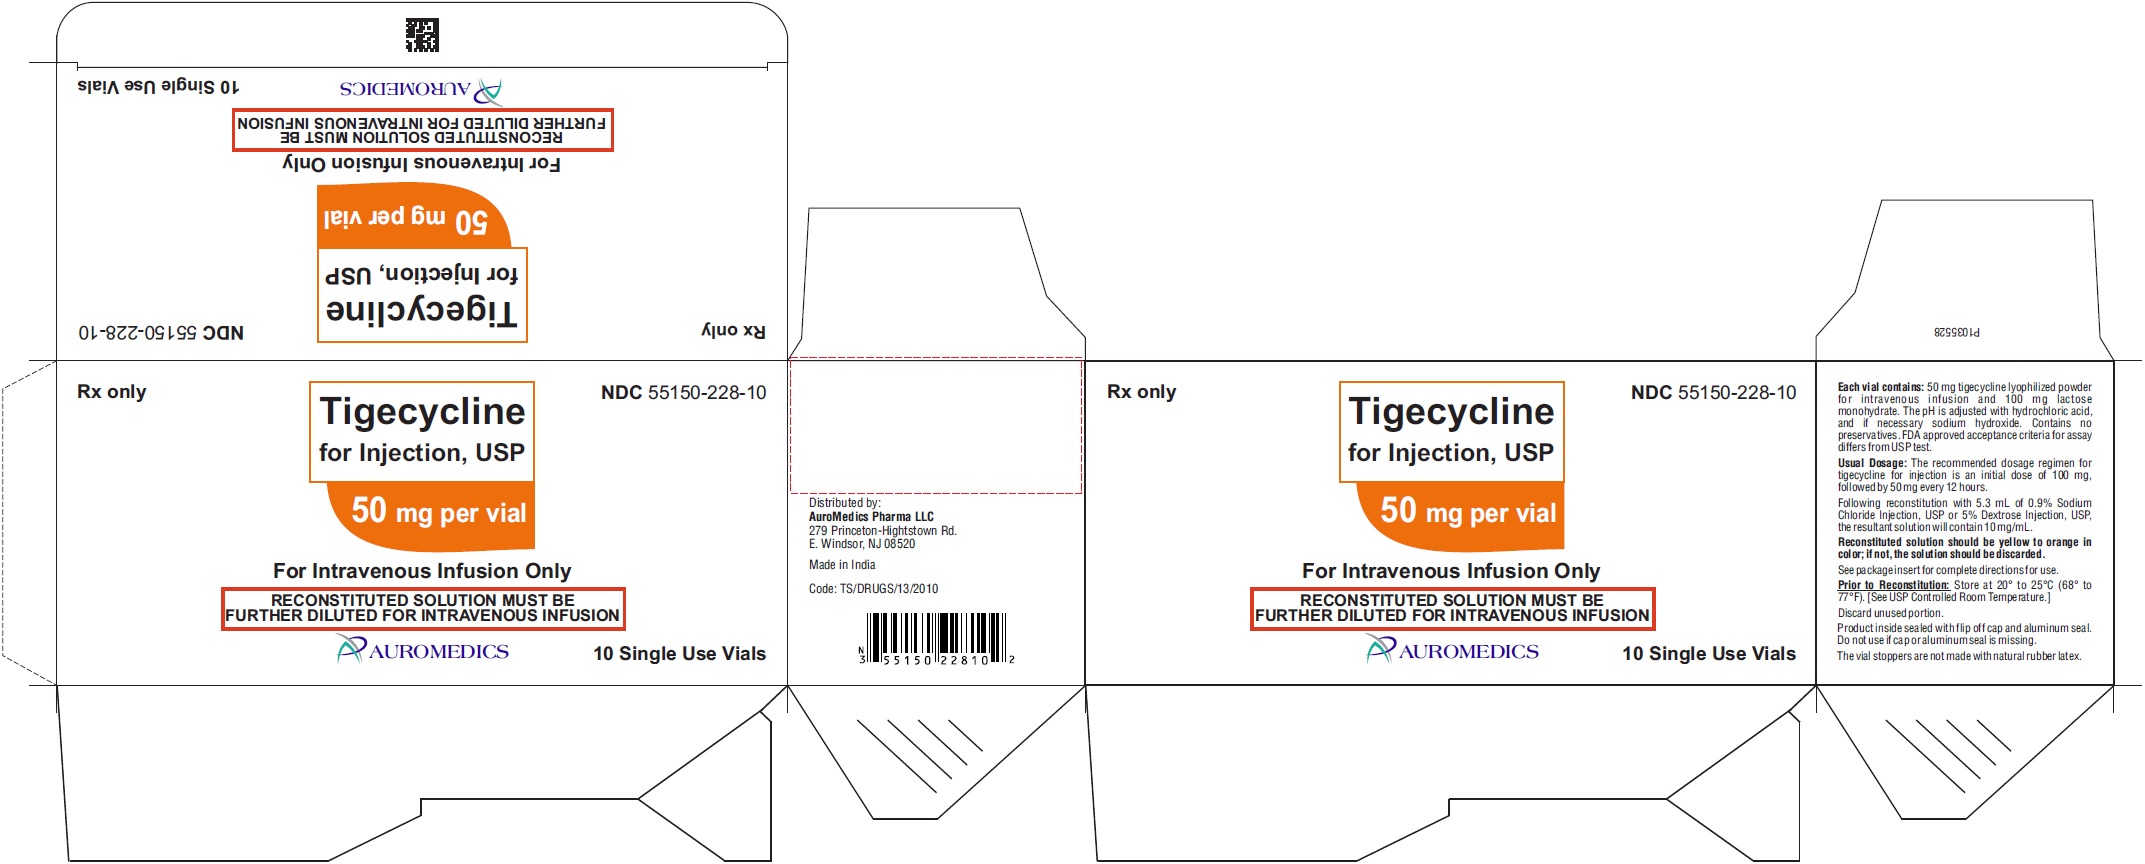 PACKAGE LABEL-PRINCIPAL DISPLAY PANEL - 50 mg per vial - Container-Carton (10 Vials)